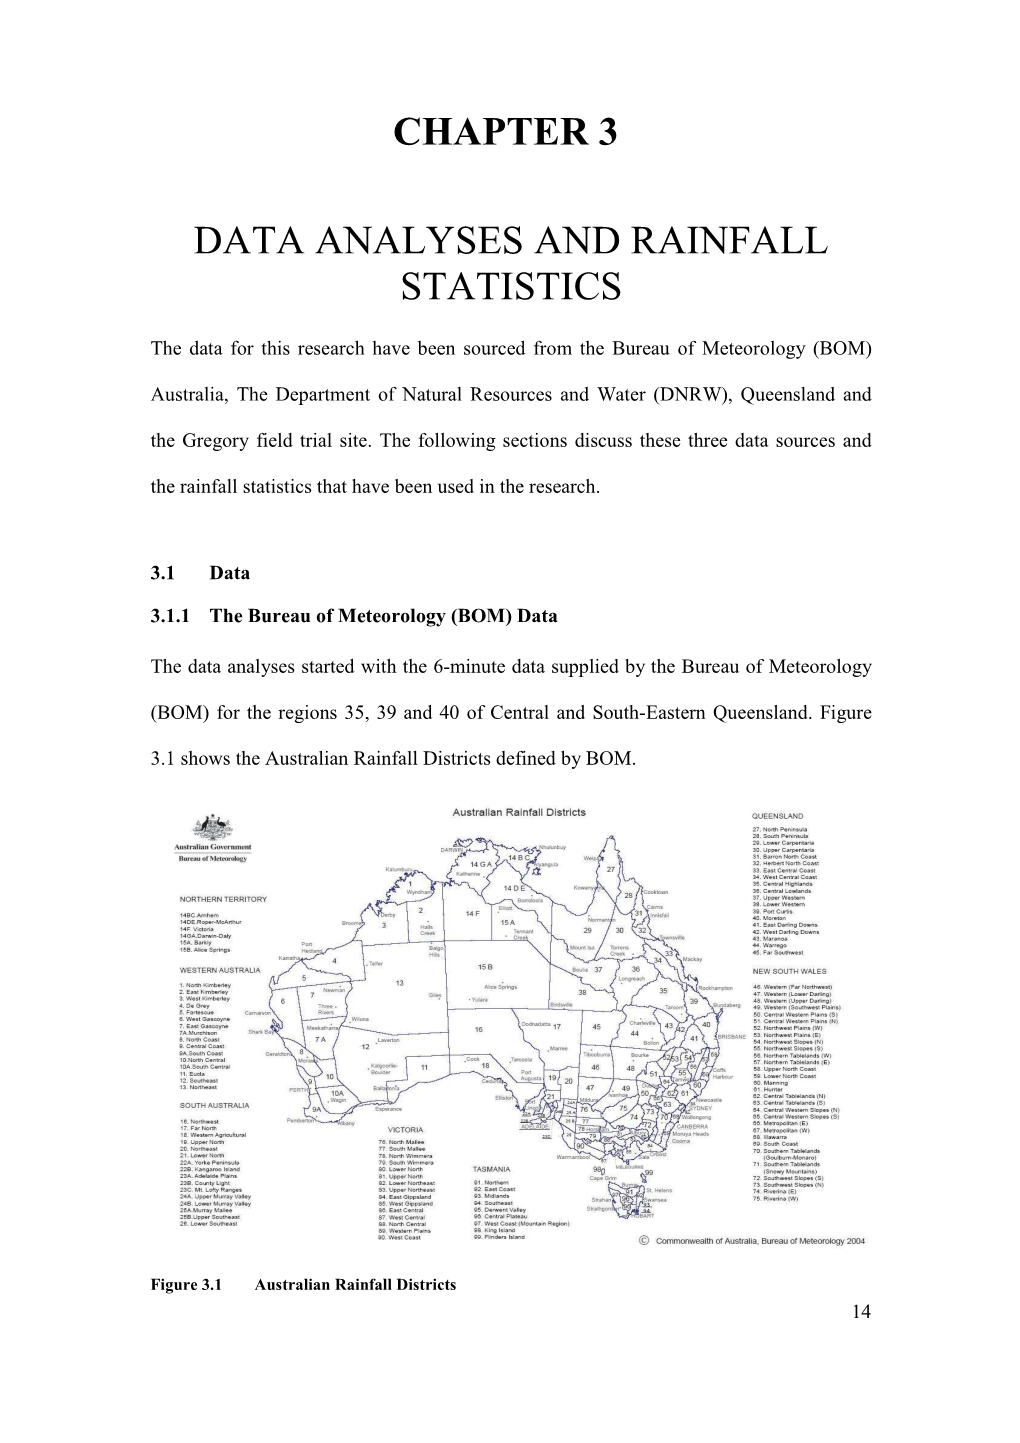 Chapter 3 Data Analyses and Rainfall Statistics